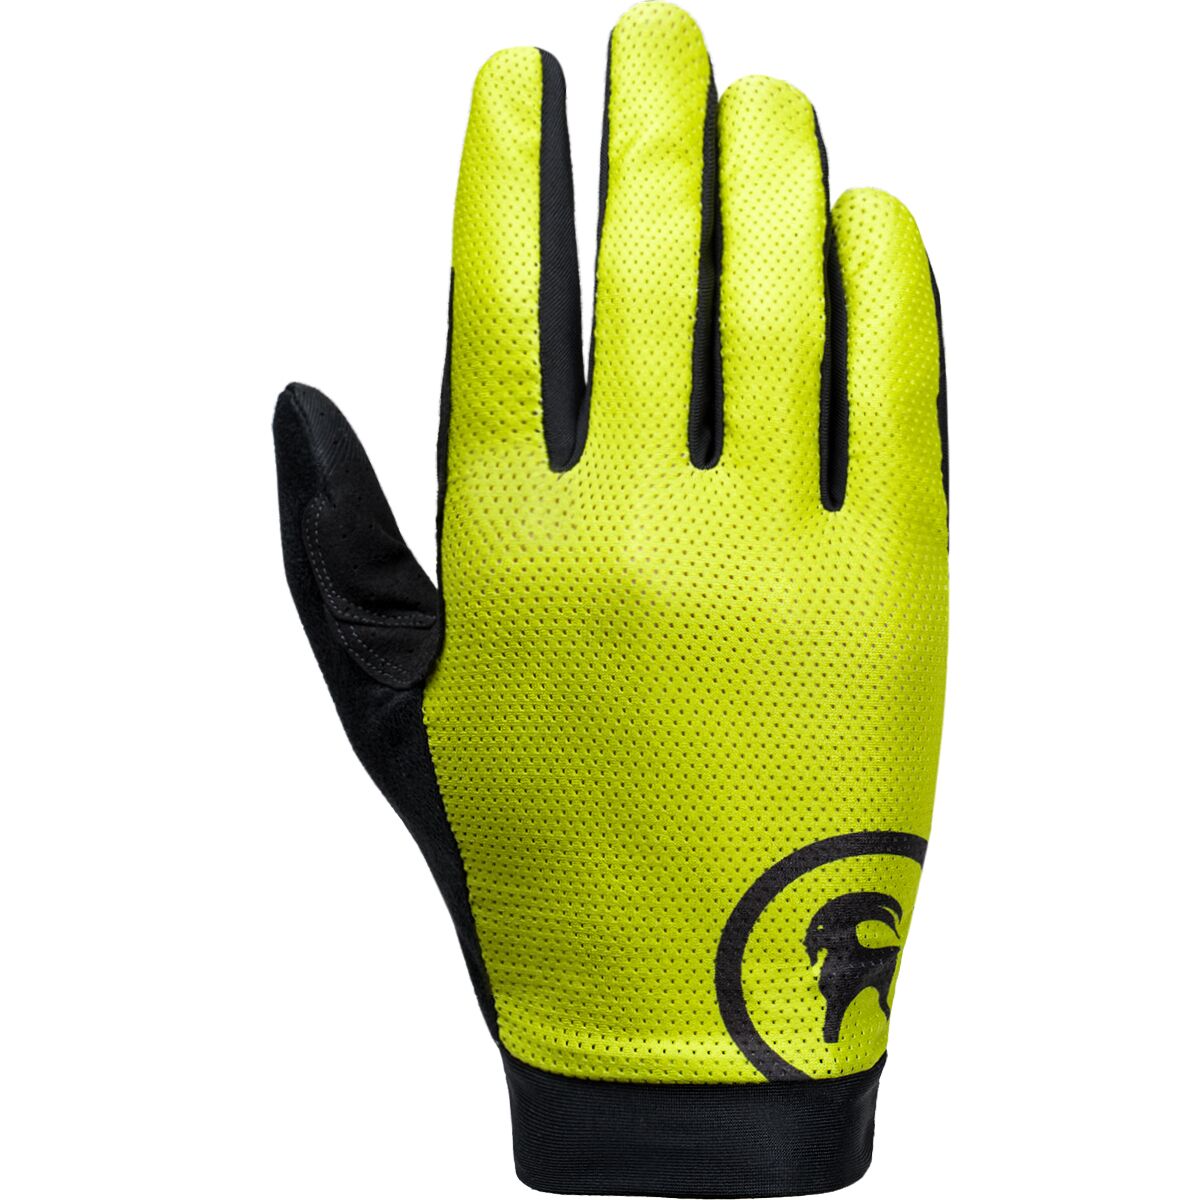 Backcountry MTB Glove - Men's